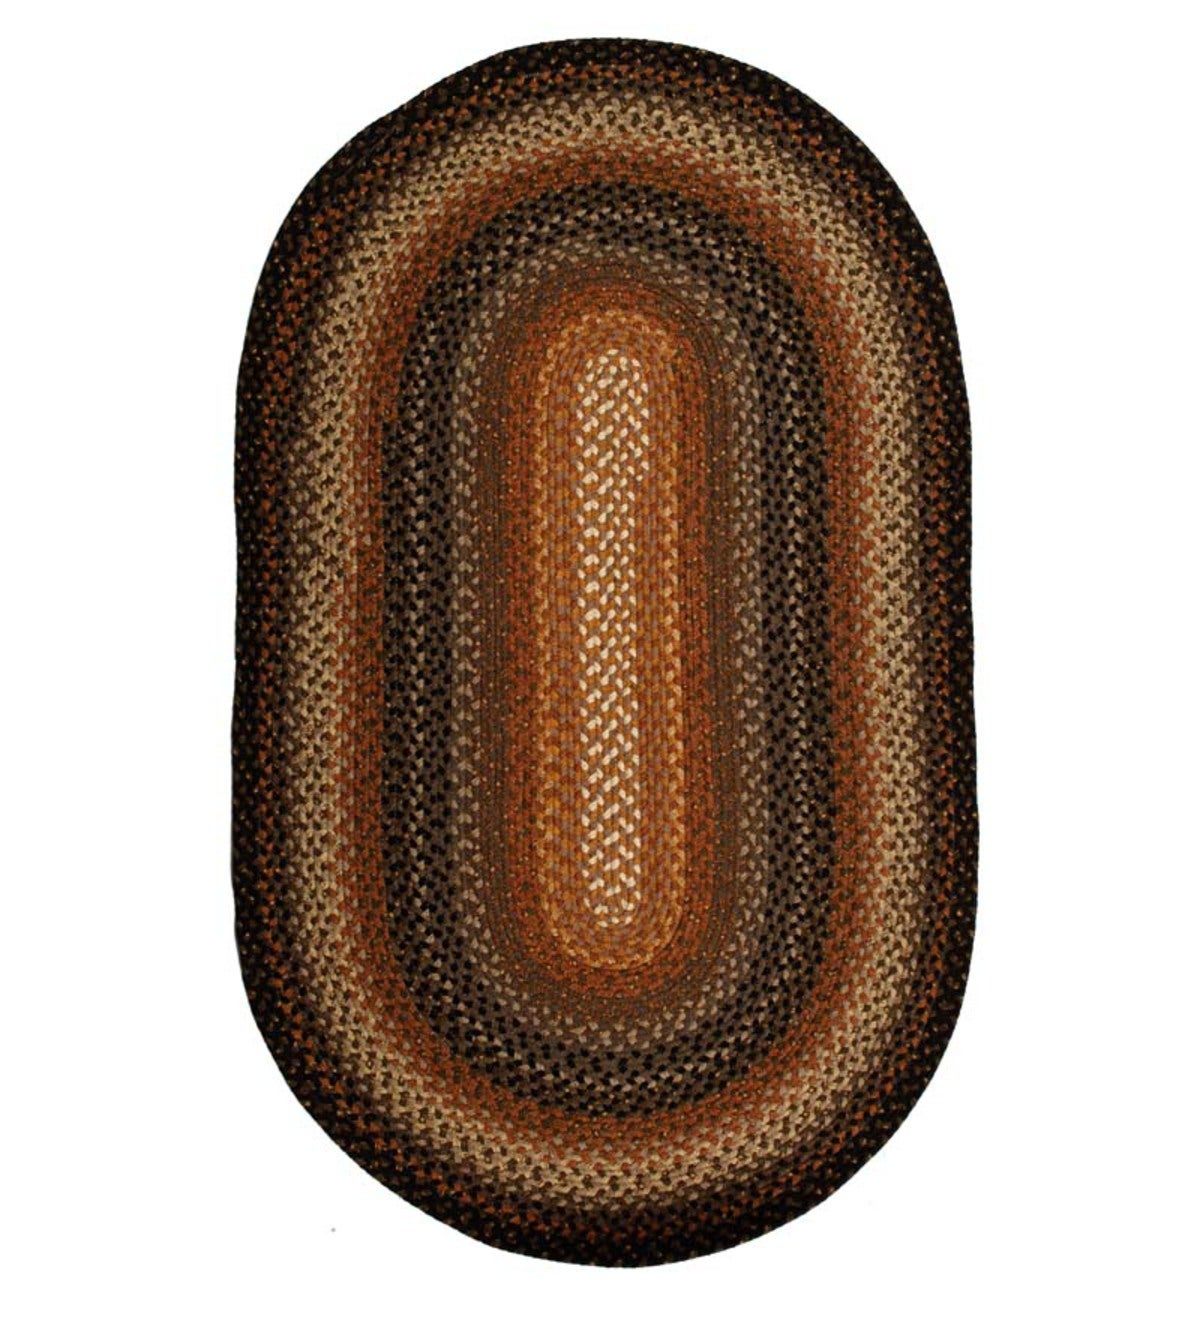 Oval Cotton Blend Braided Rug, 2' x 3' - Cocoa Bean